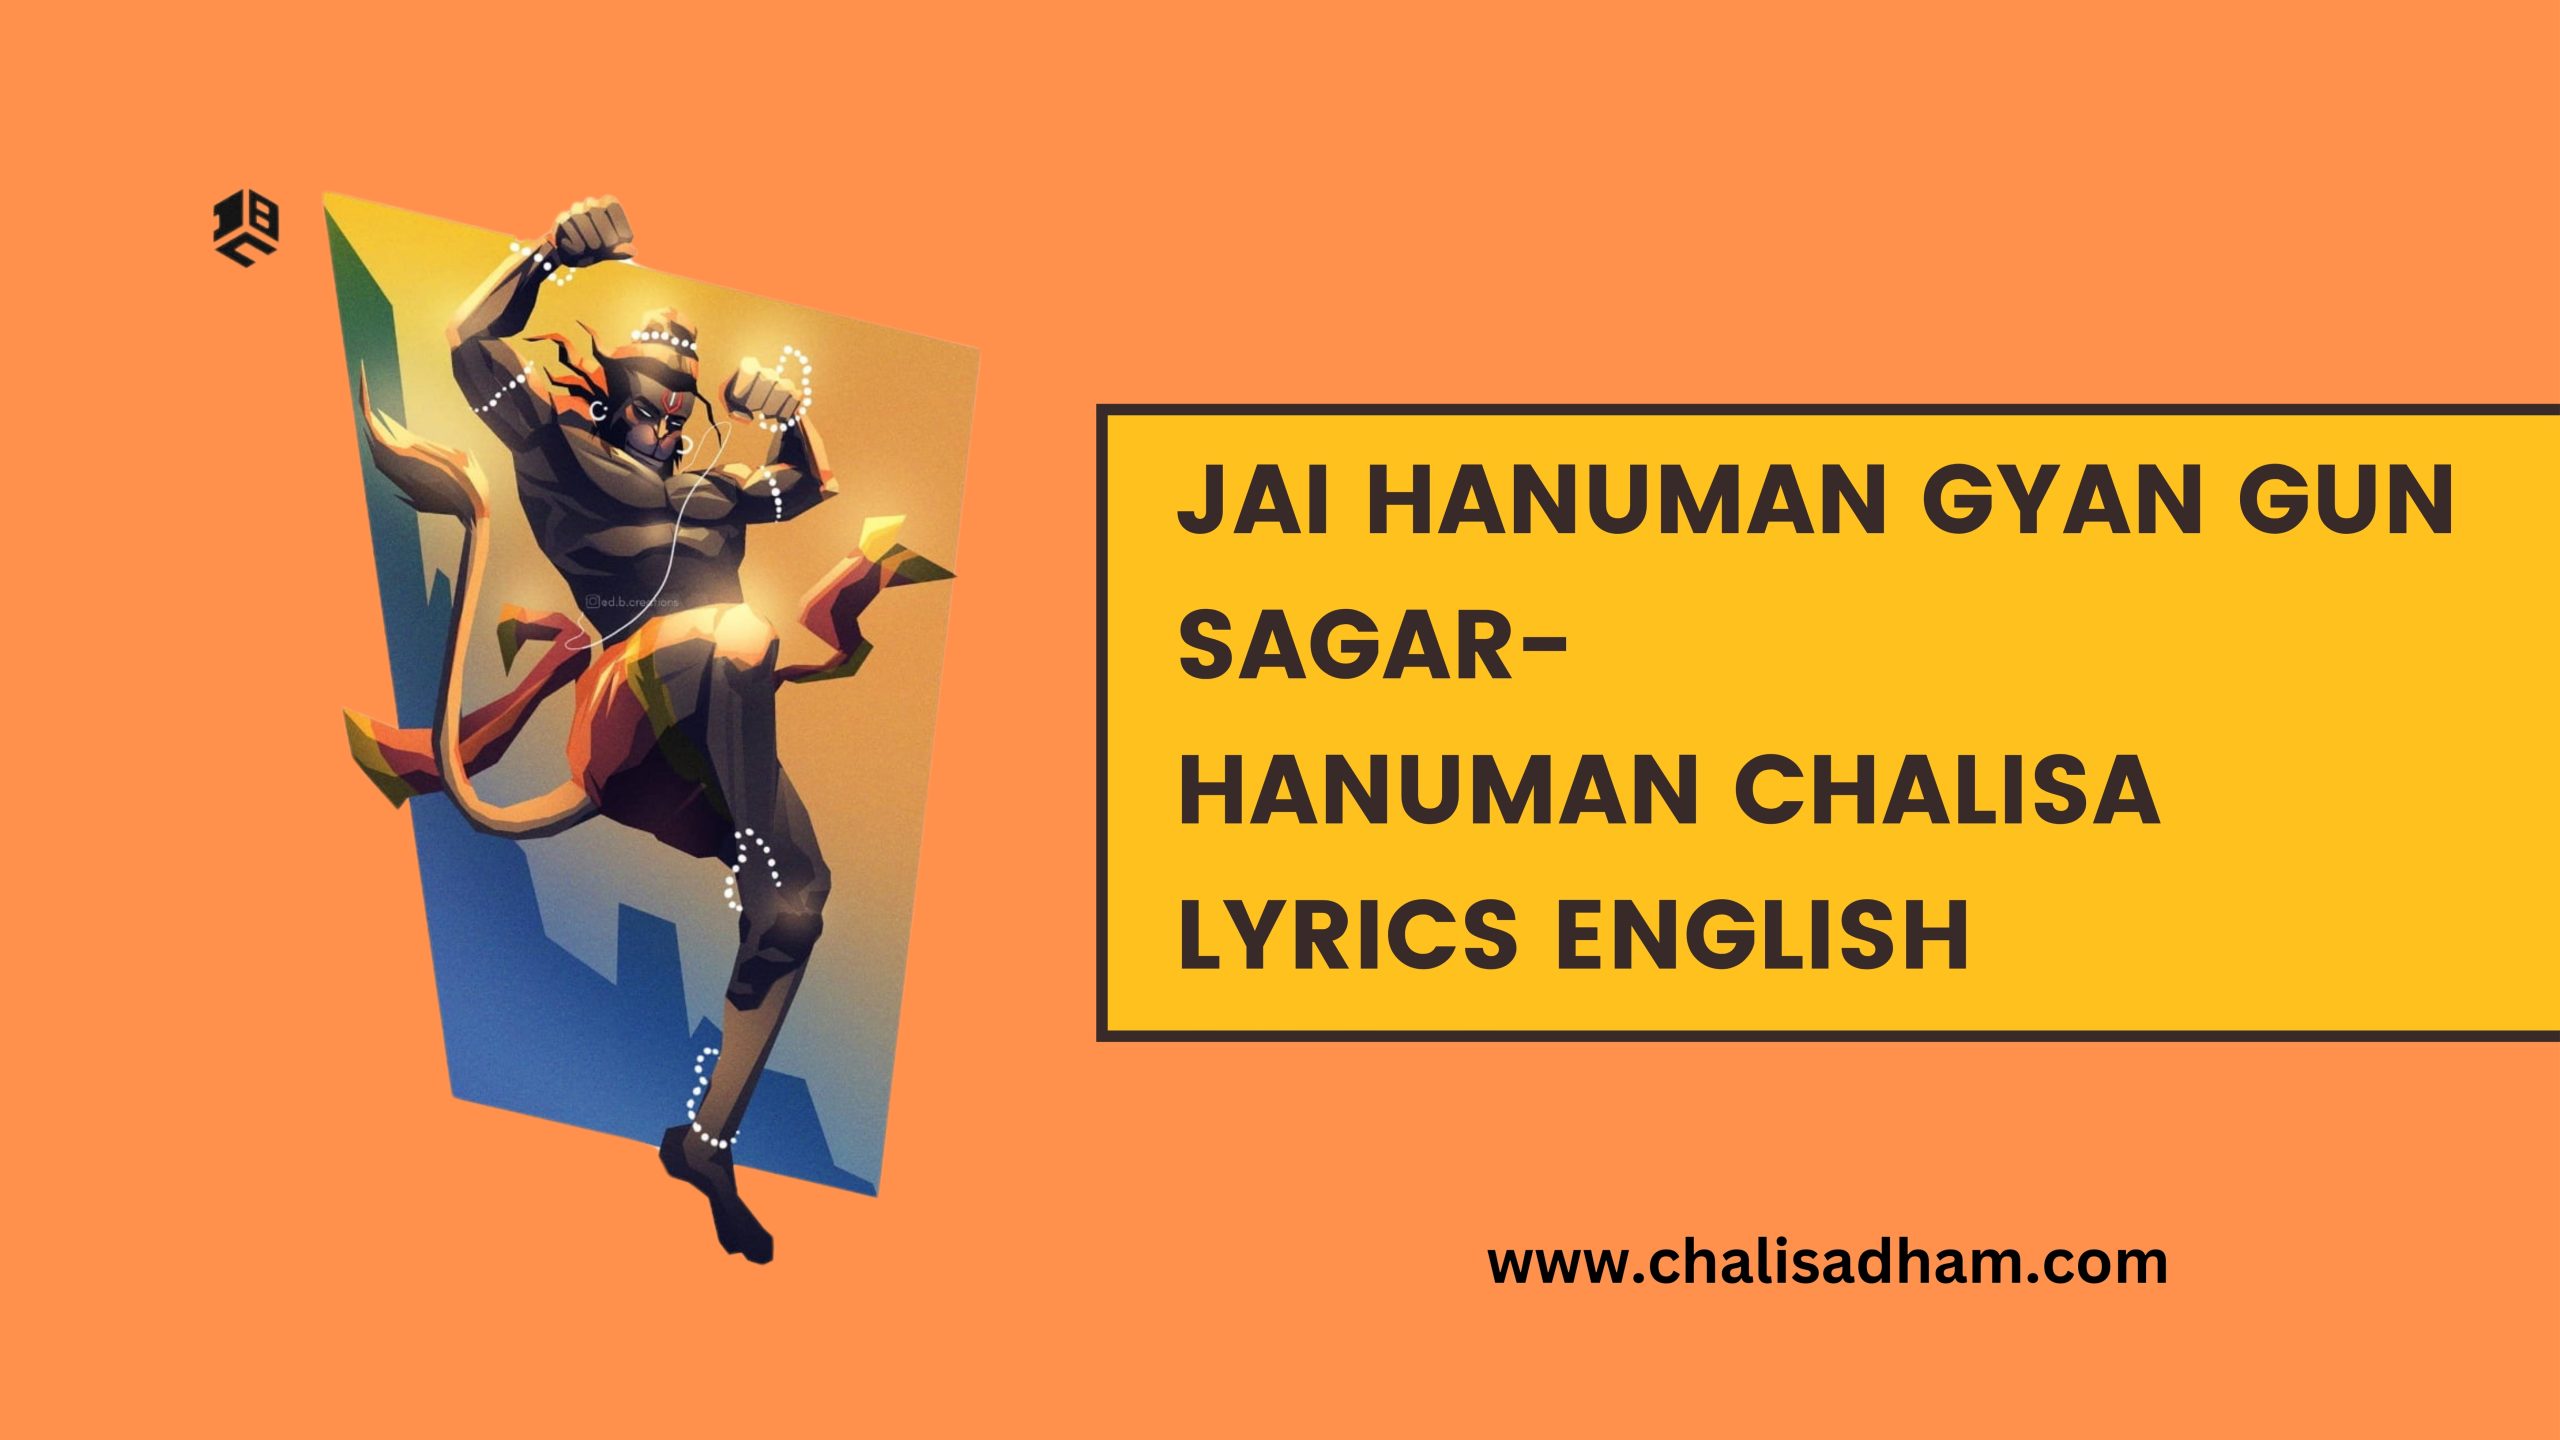 Hanuman Chalisa Lyrics English English Translation of Hanuman Chalisa